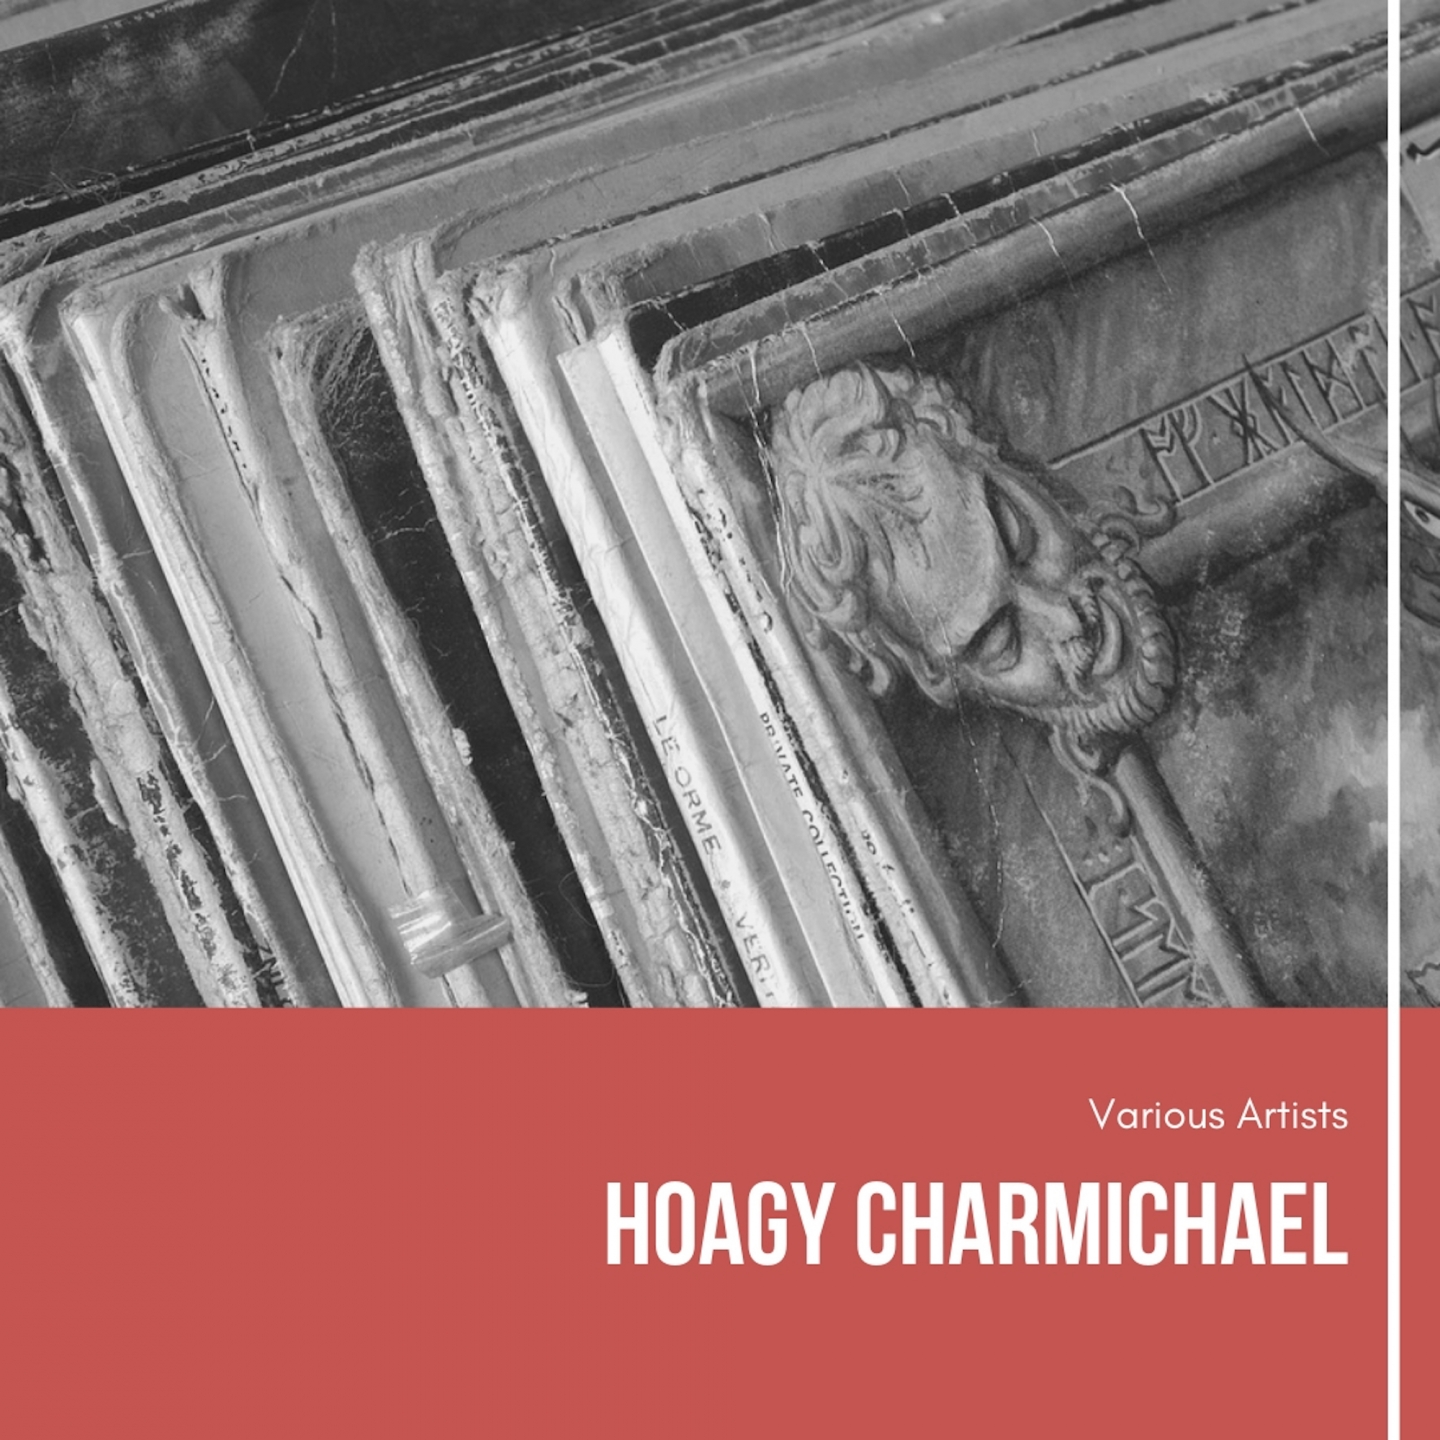 Hoagy Charmichael (The American Songbook)